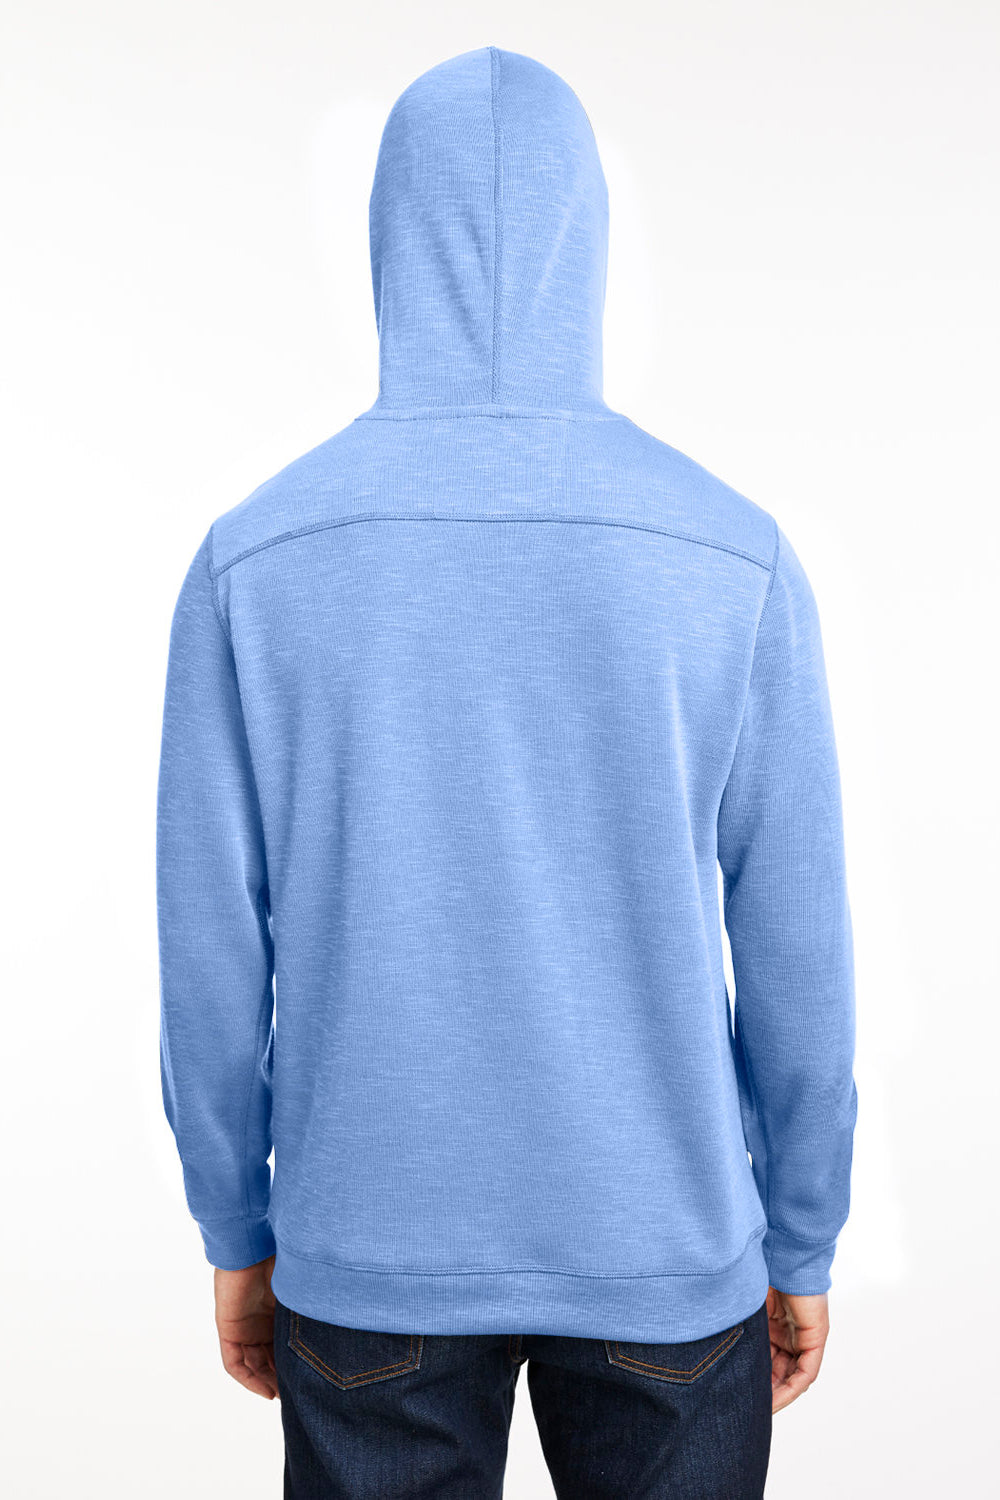 Nautica N17990 Mens Sun Surfer Supreme Hooded Sweatshirt Hoodie Vintage Mavi Blue Back